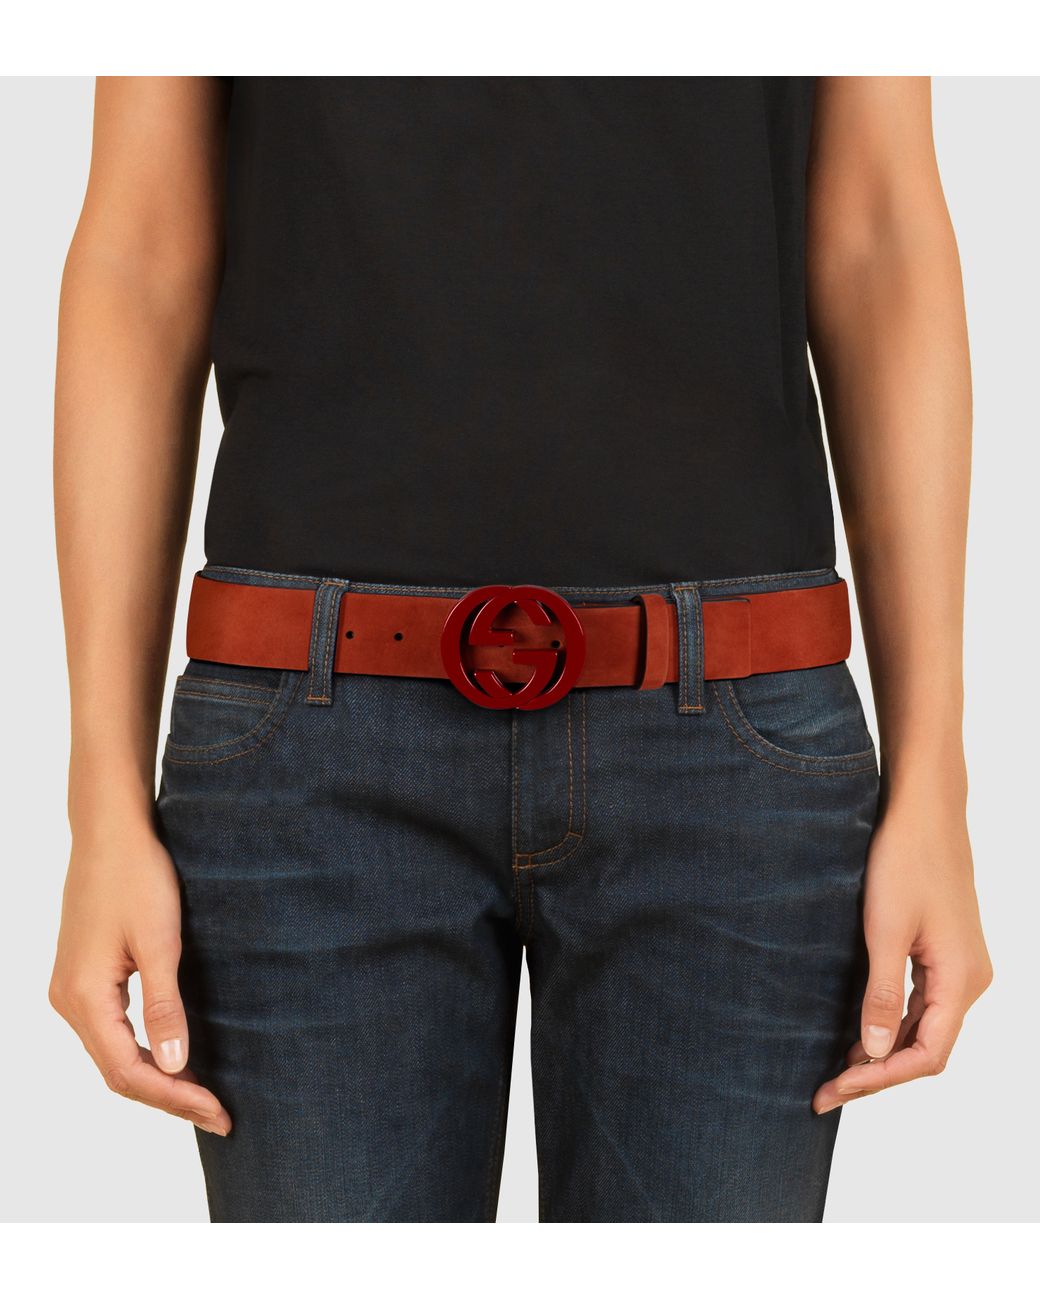 NEW Gucci Interlocking G Red Leather Belt